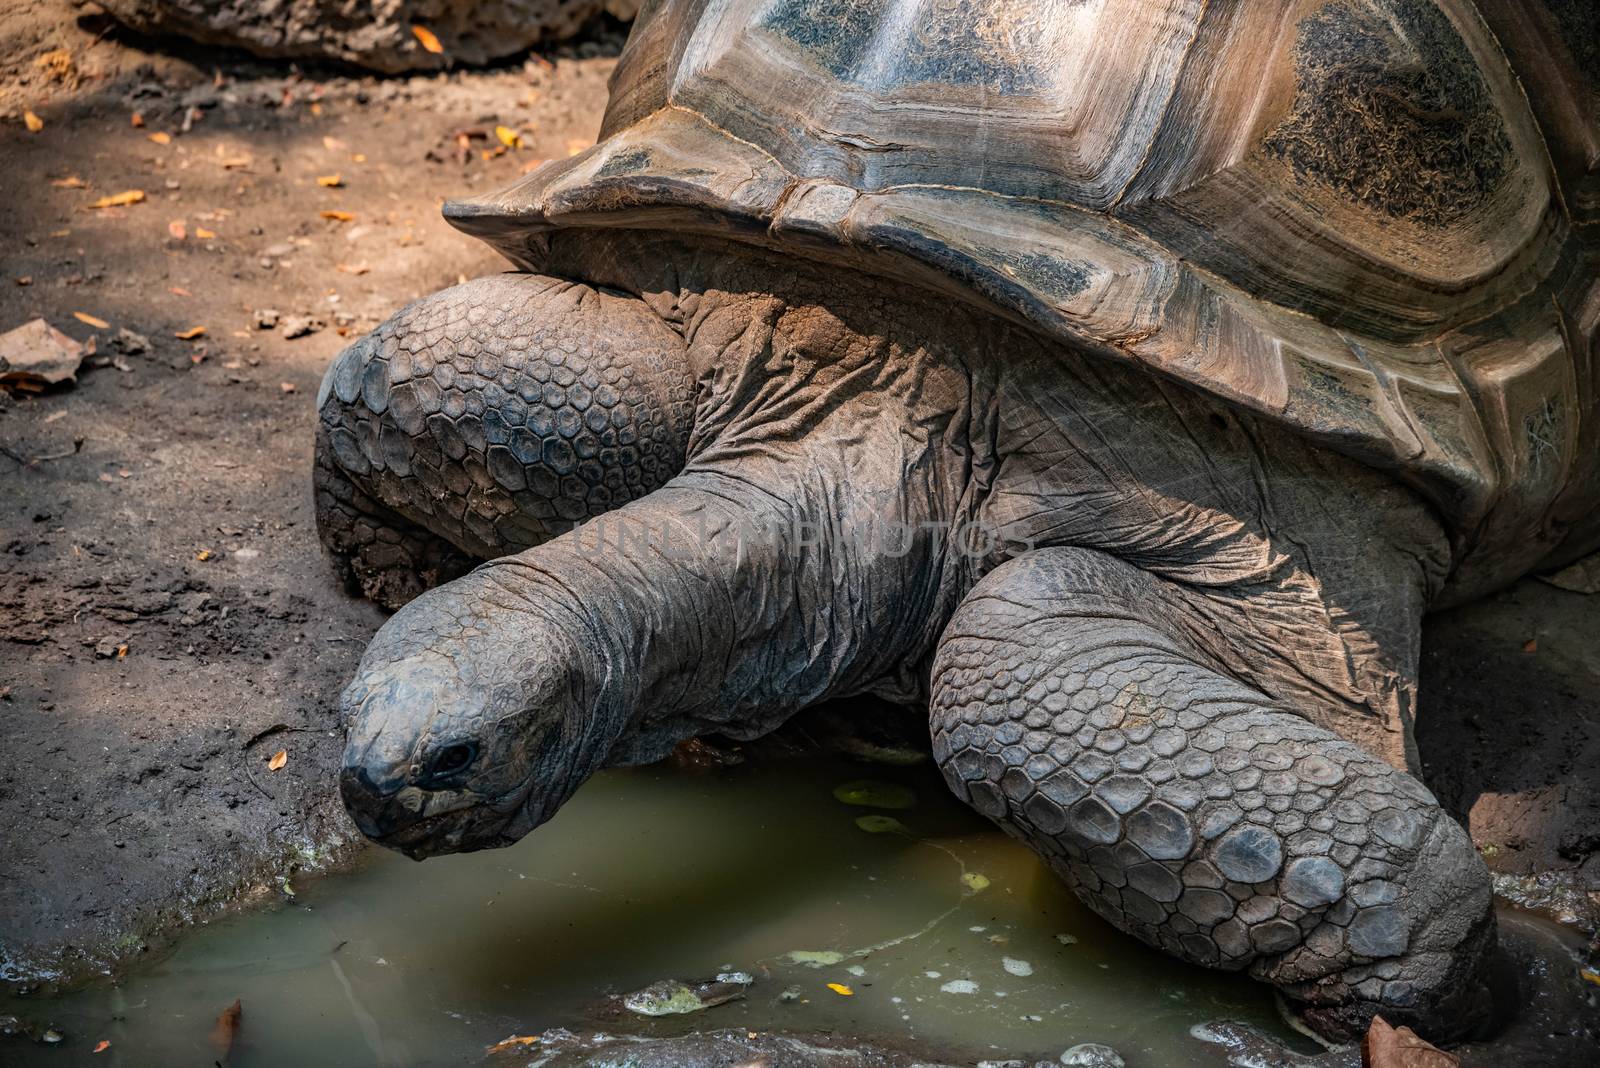 Aldabra Tortoise resting near a pond.